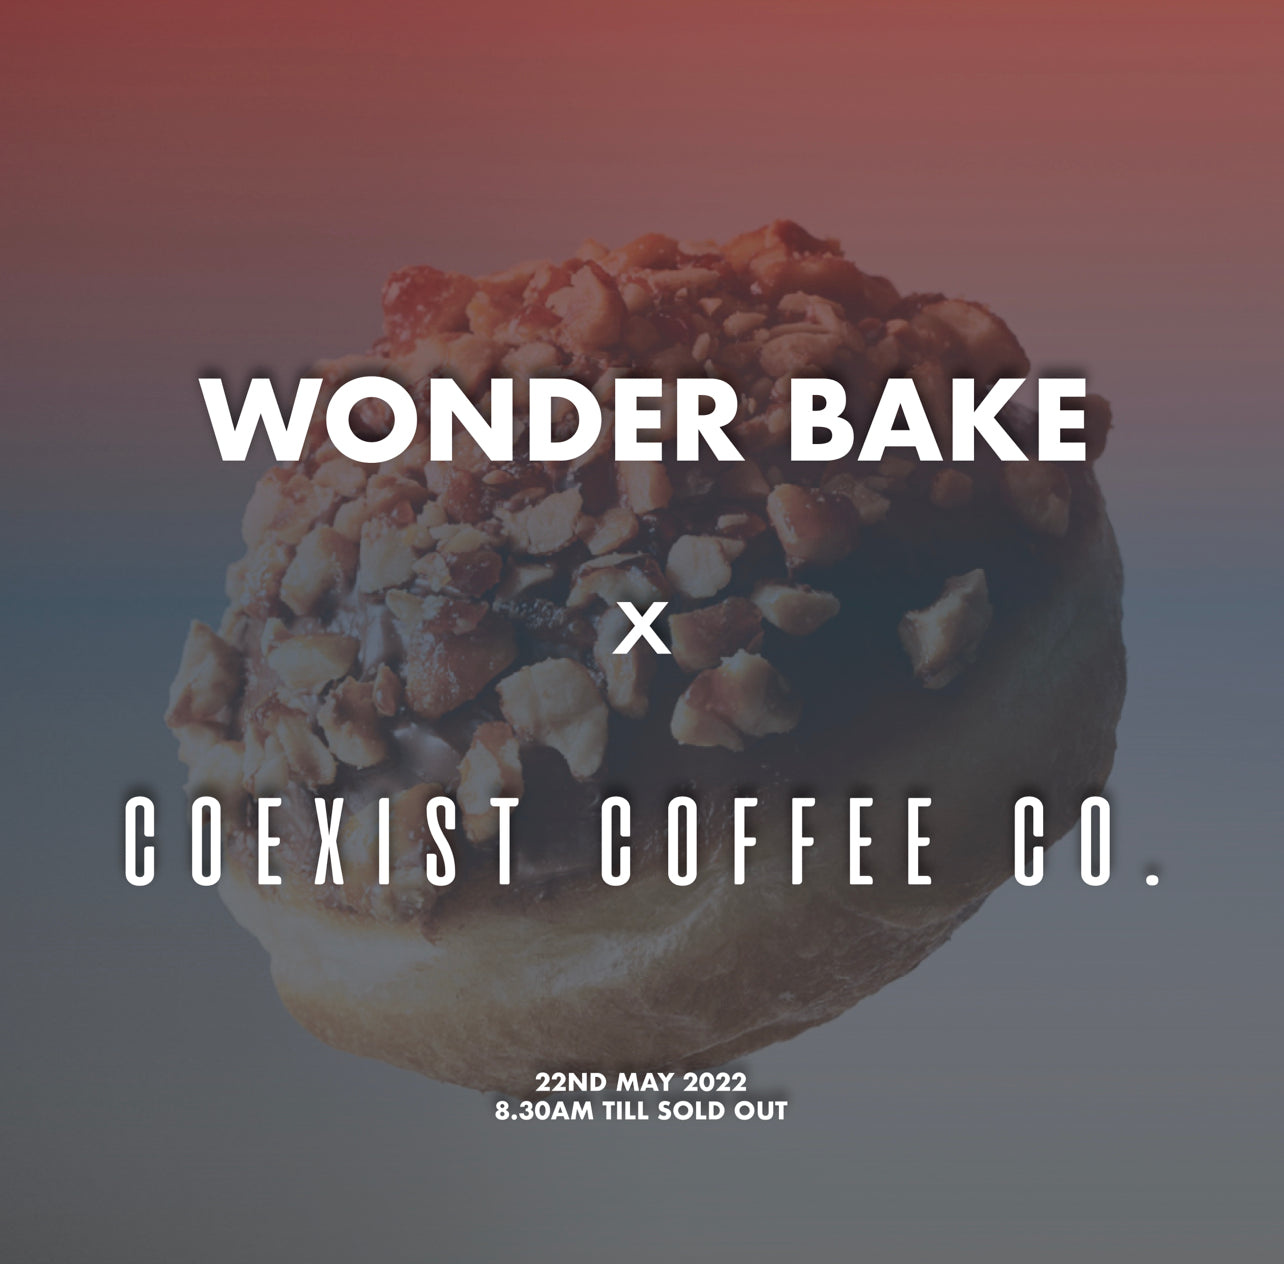 Coexist Coffee Co. x Wonder Bake (22nd May 2022)